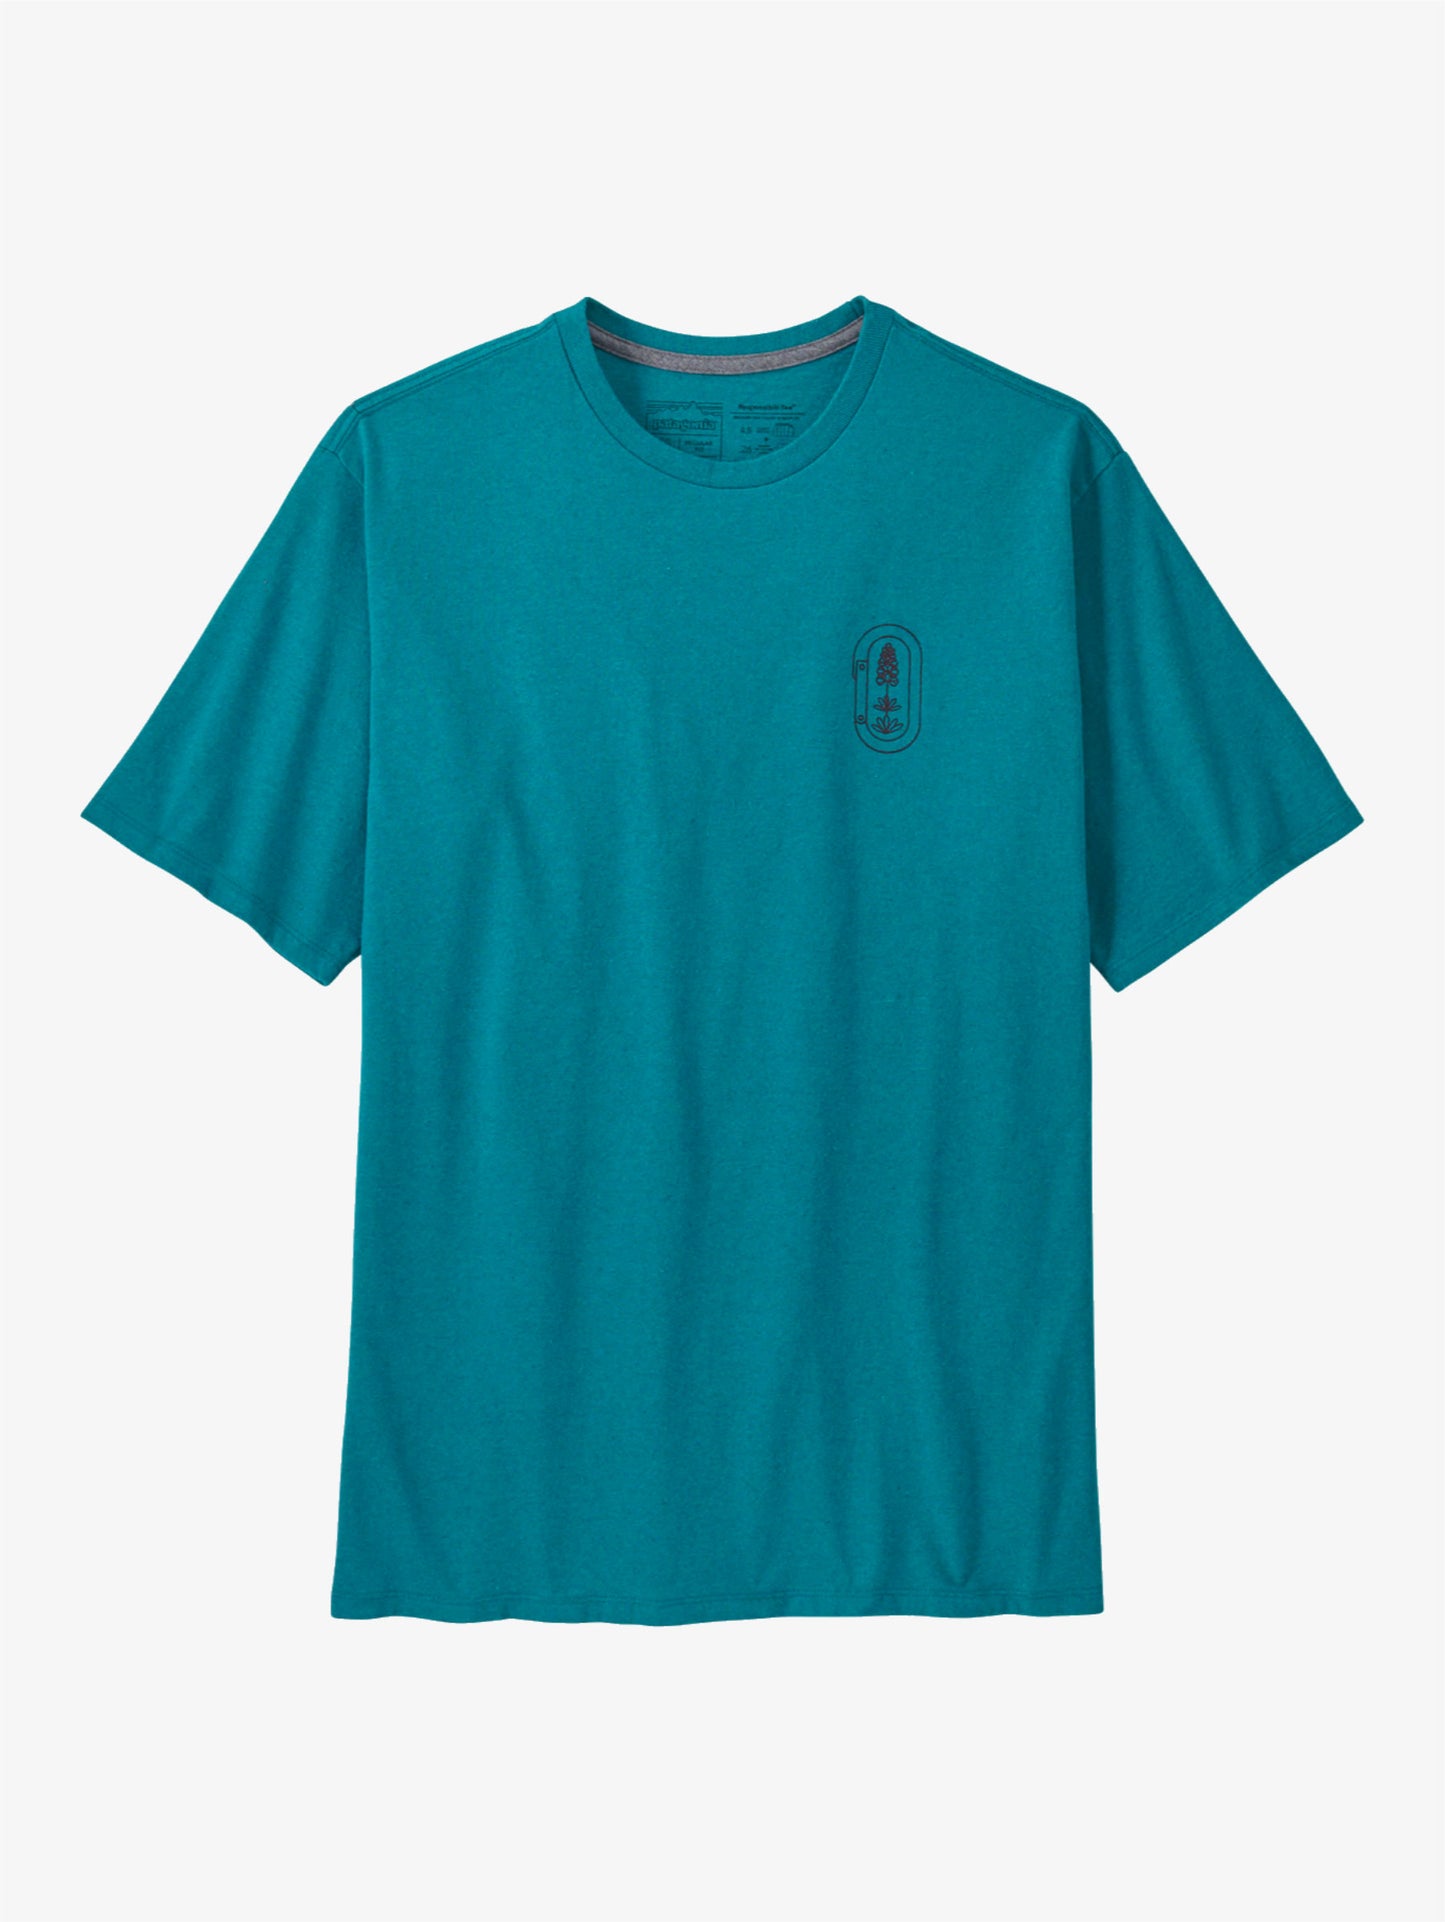 Men's Clean Climb Trade Responsibili-Tee belay blue t-shirt